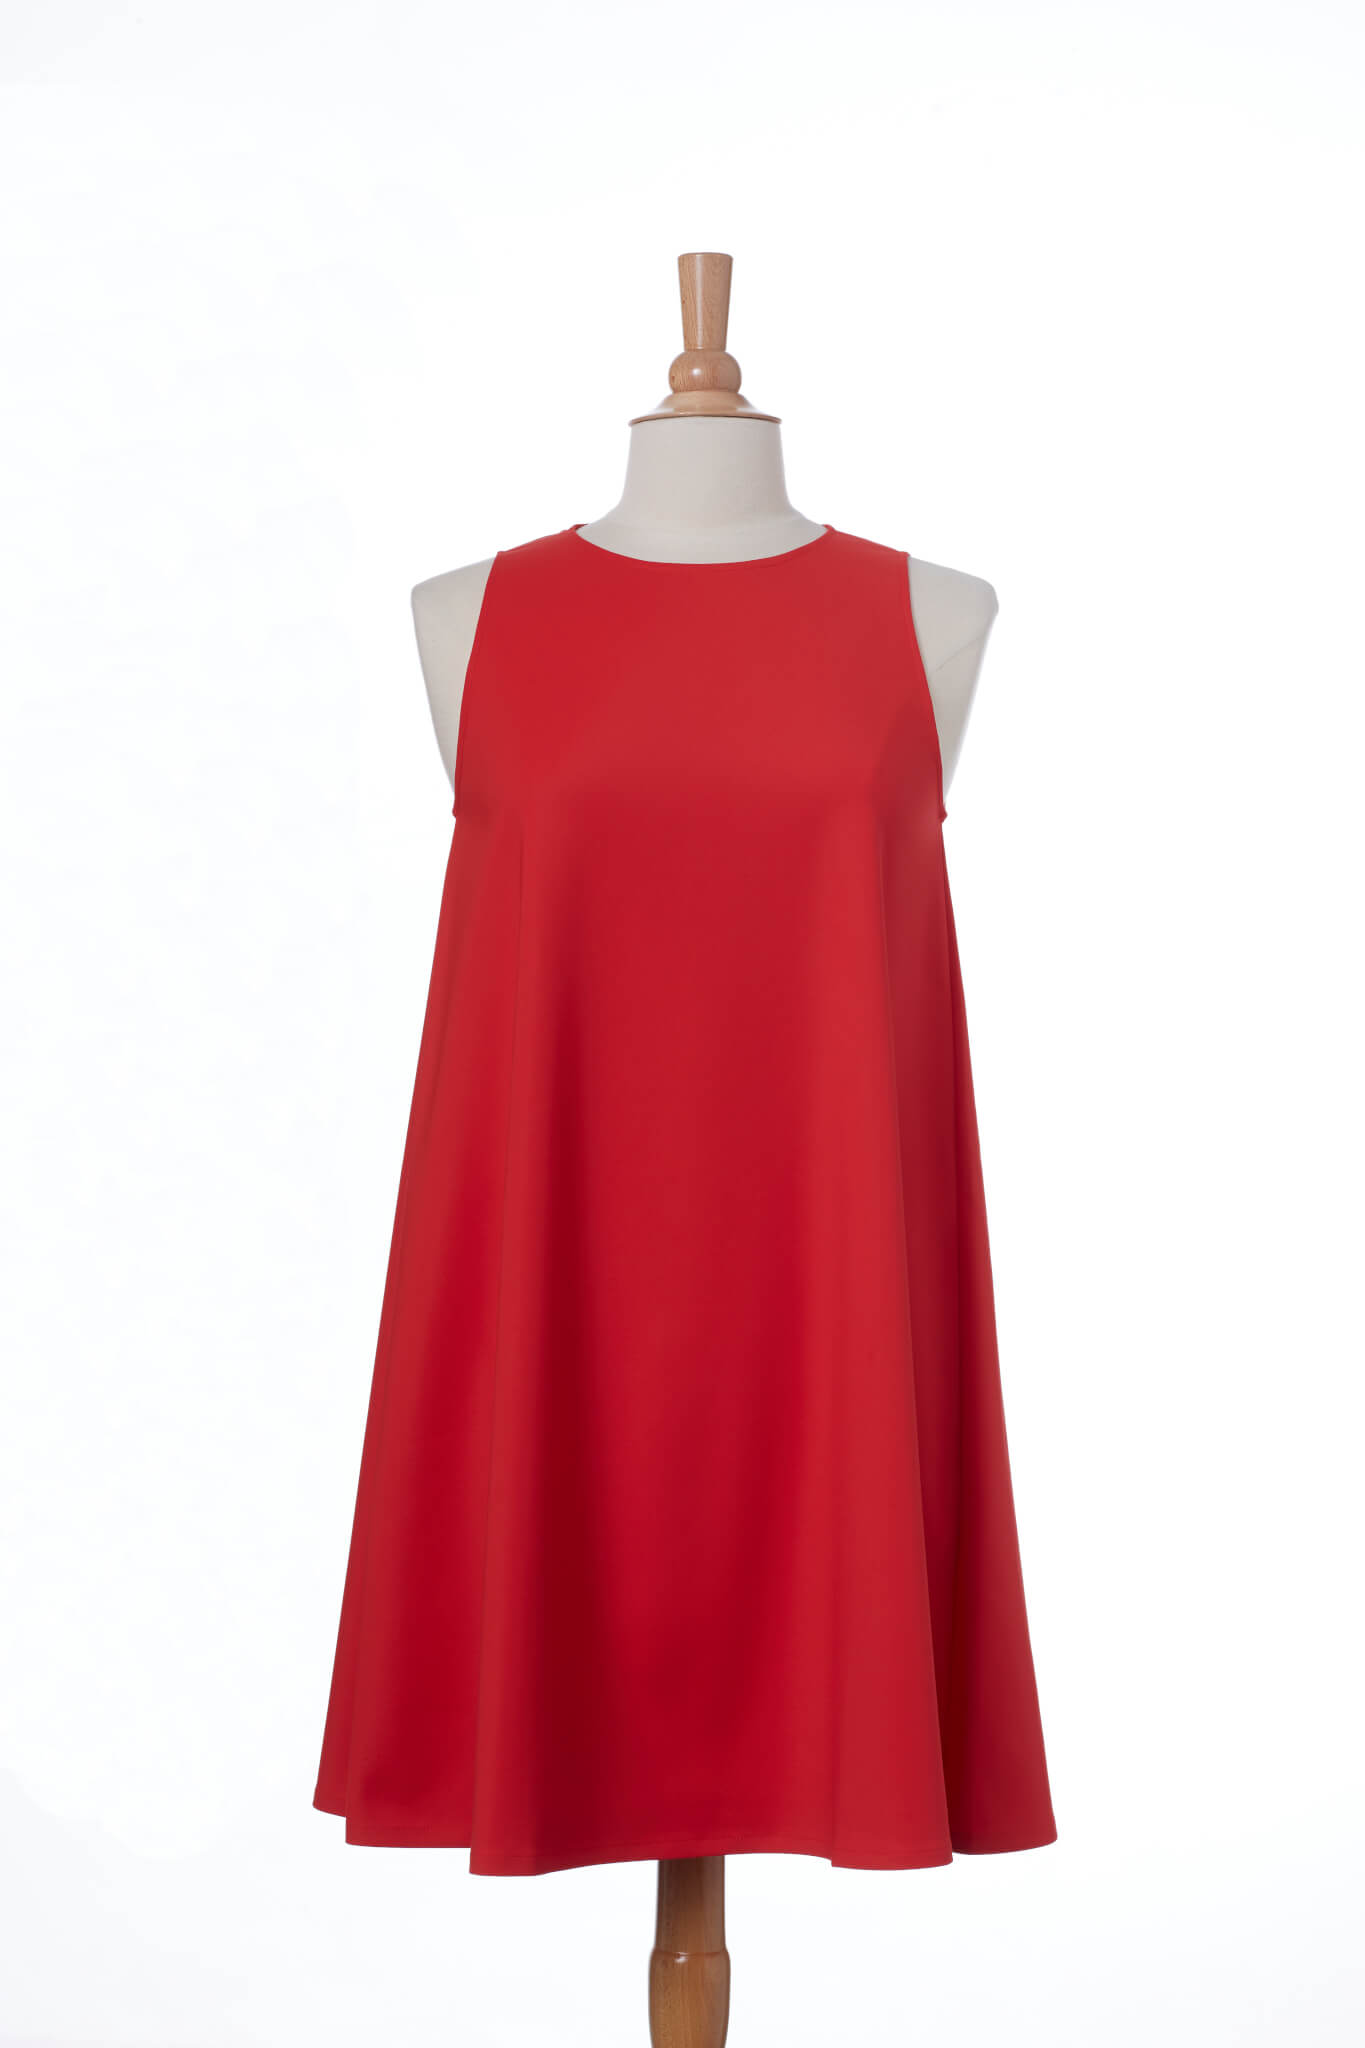 Jazia - A-Line Sleeveless Dress - Fiery Emerald